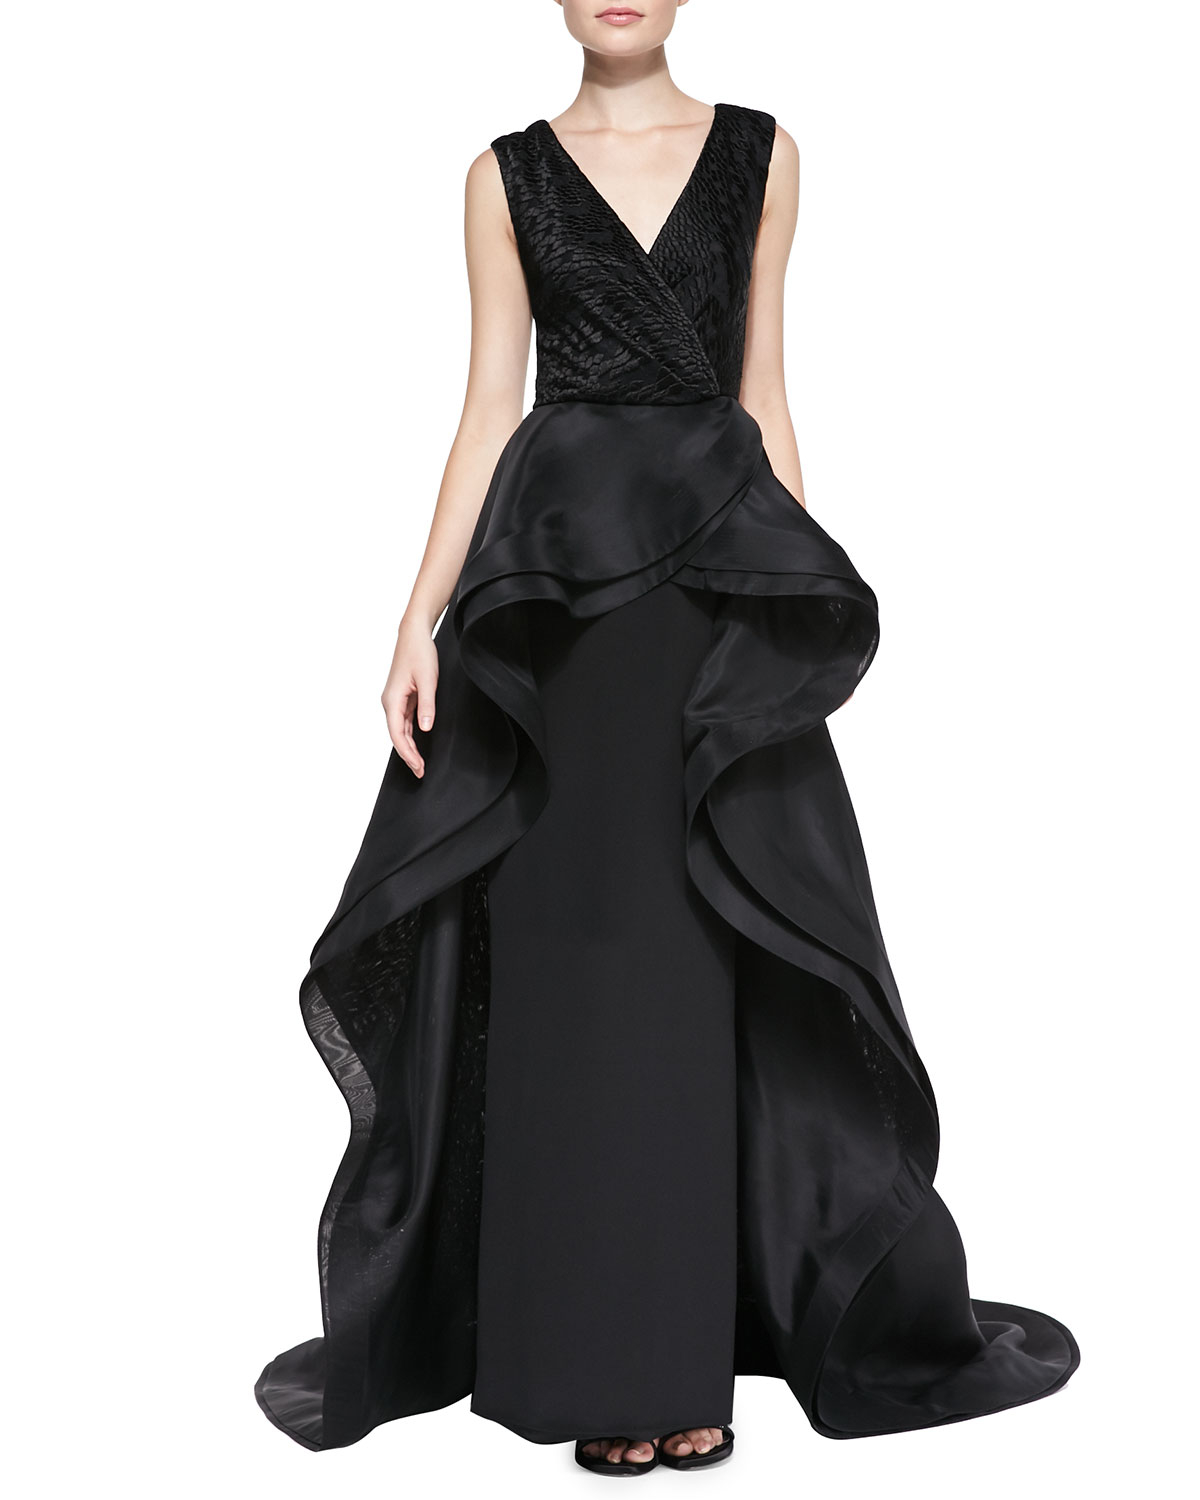 Lyst - Christian Siriano Sleeveless Flounce Overlay Gown in Black